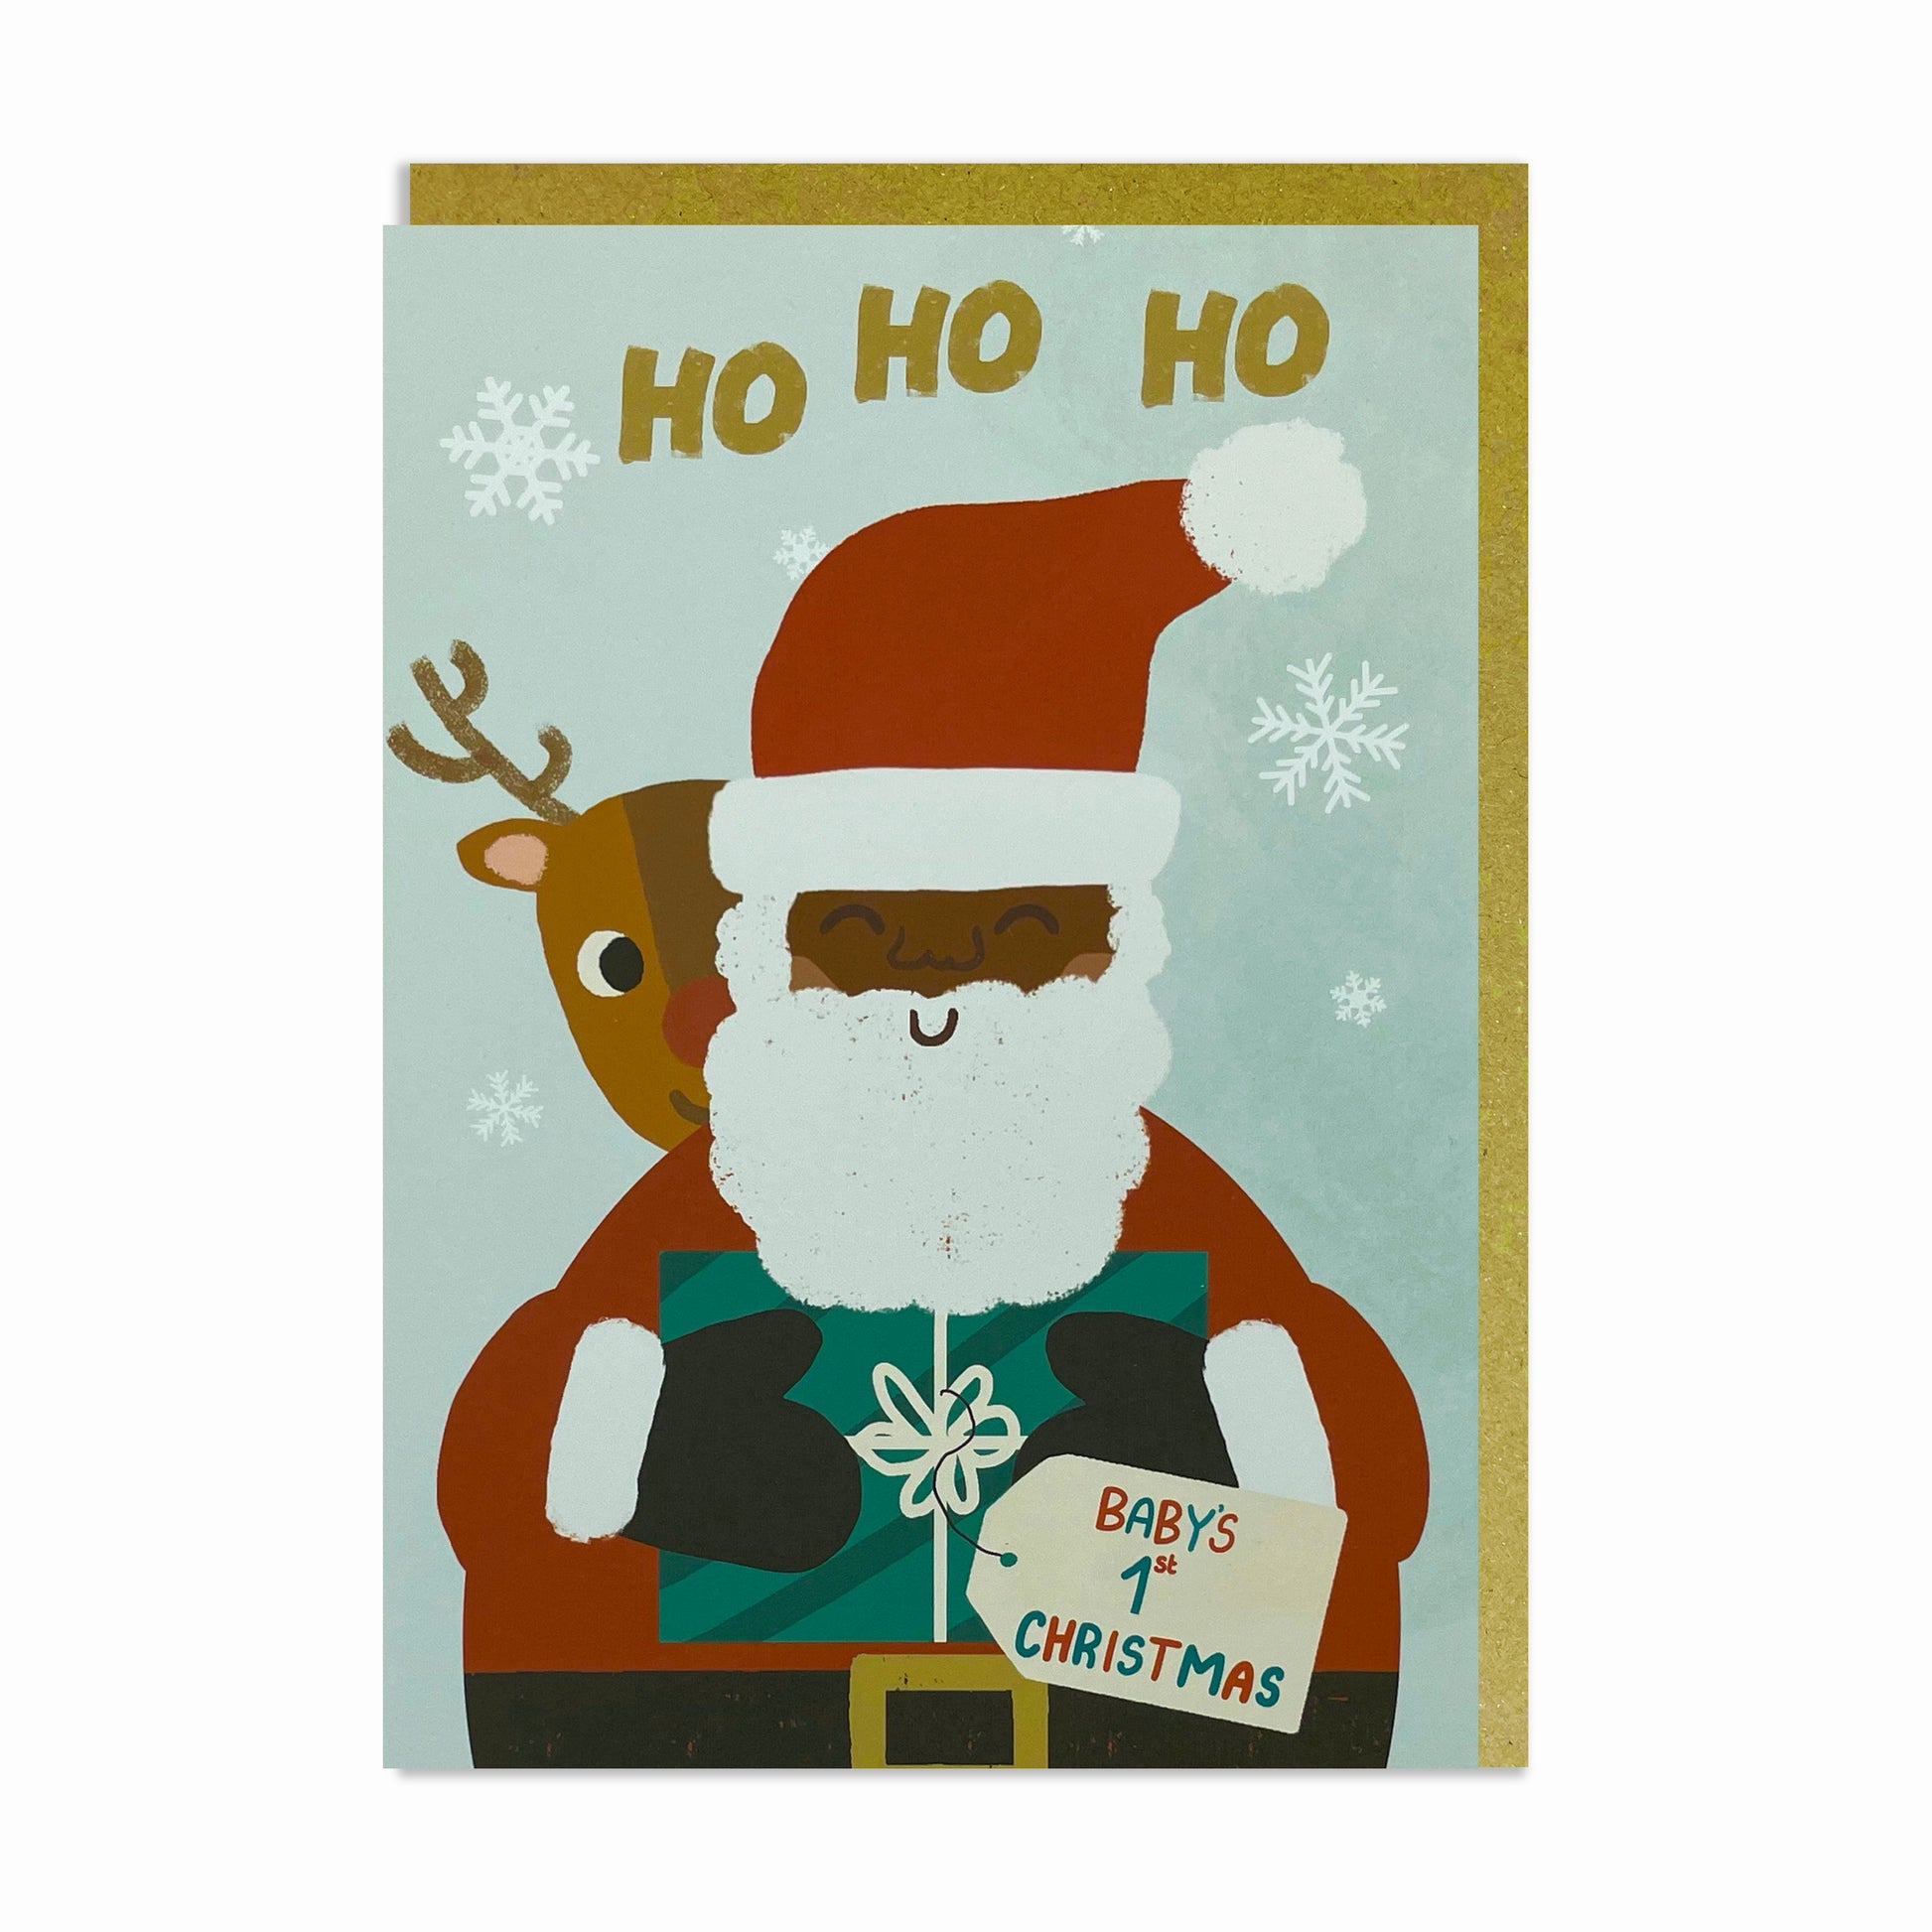 Black Santa holding a Christmas present, with Rudolph behind him. Black Christmas card.